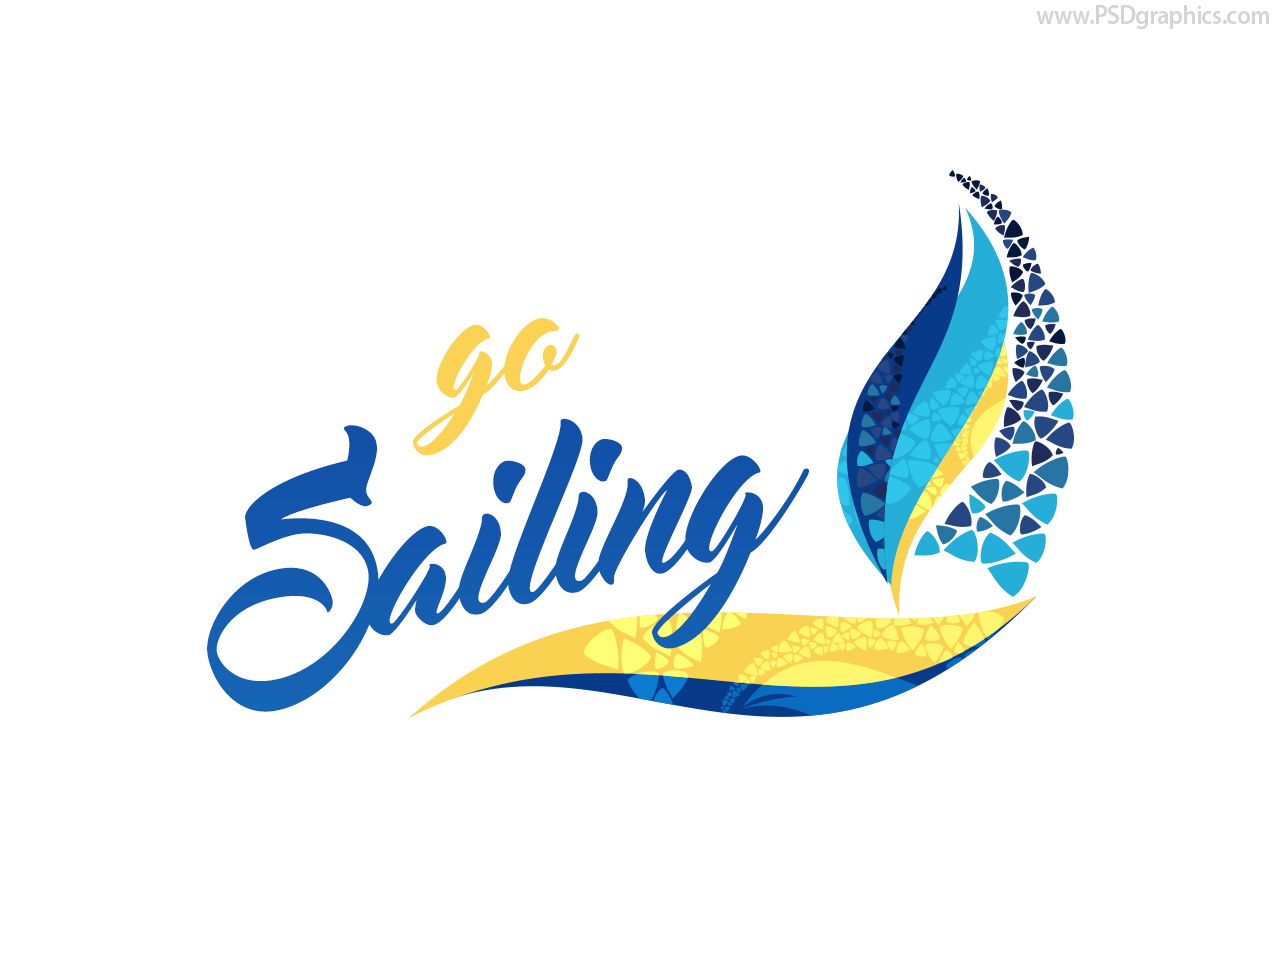 Sailing logo, PSD and AI templates.